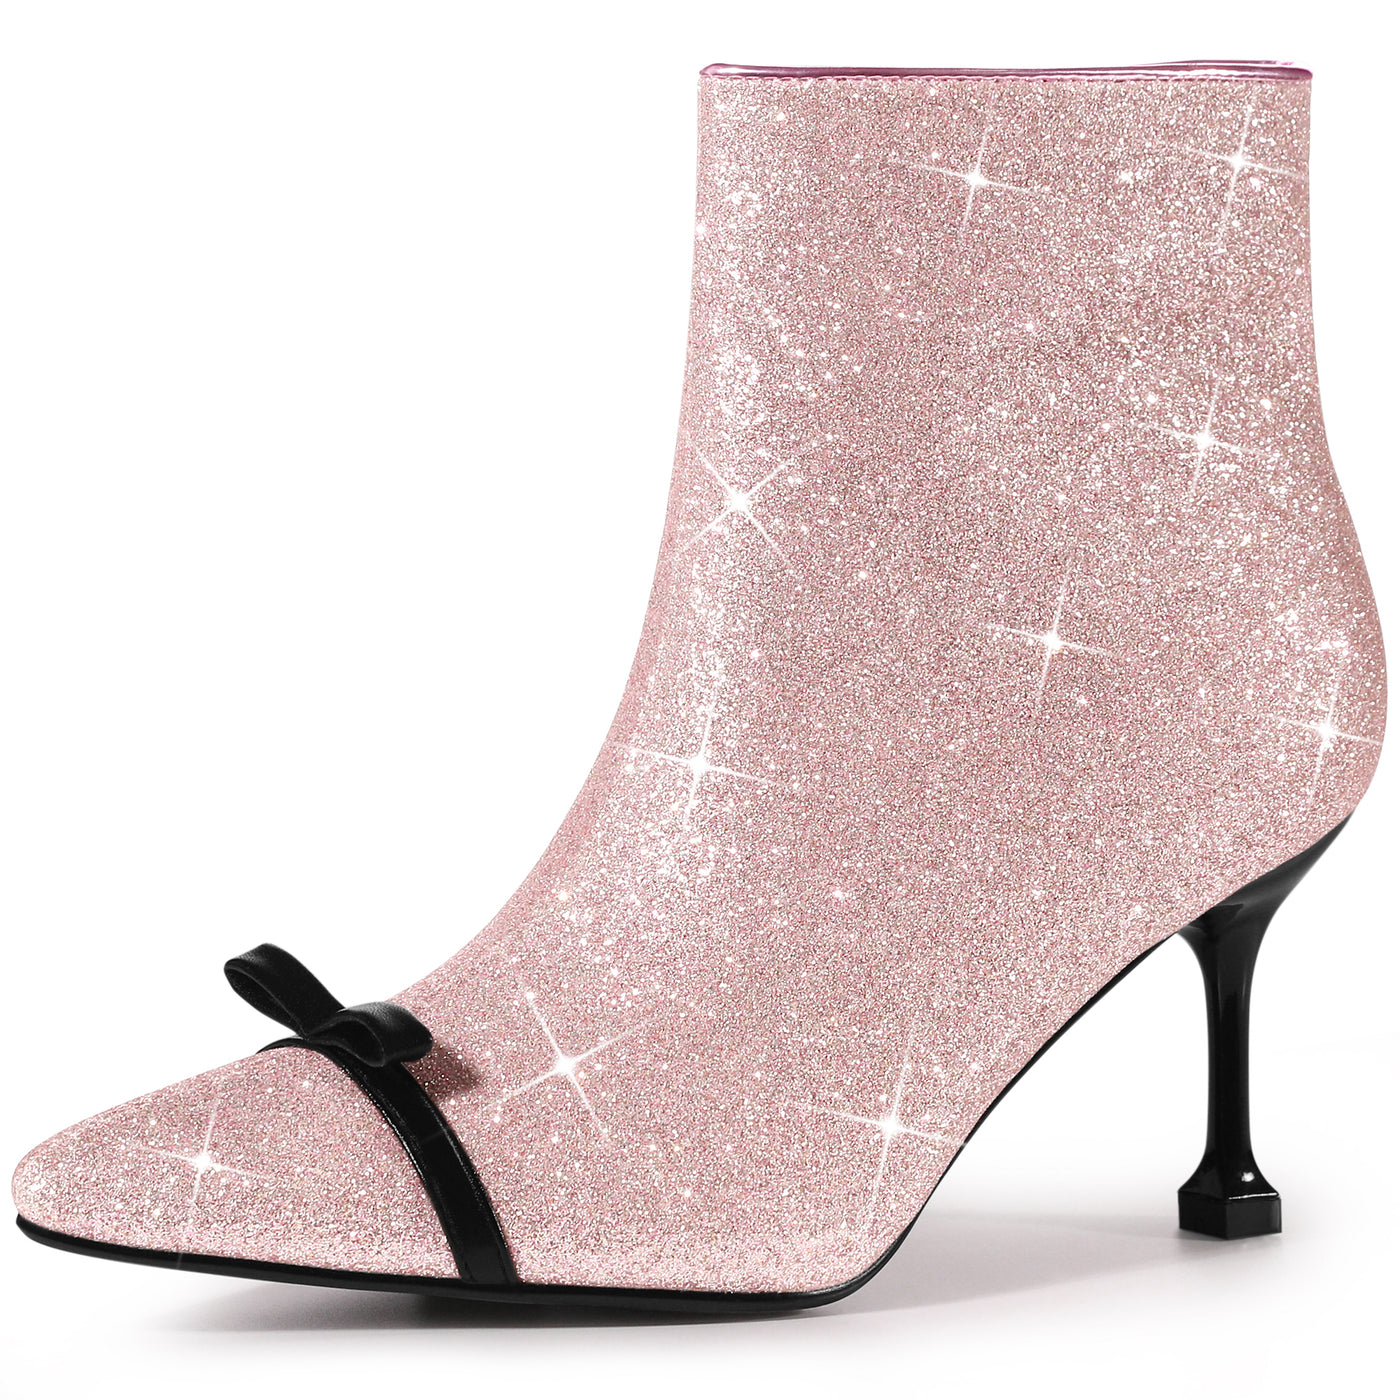 Allegra K Glitter Pointed Toe Stiletto Heel Sparkle Ankle Boots